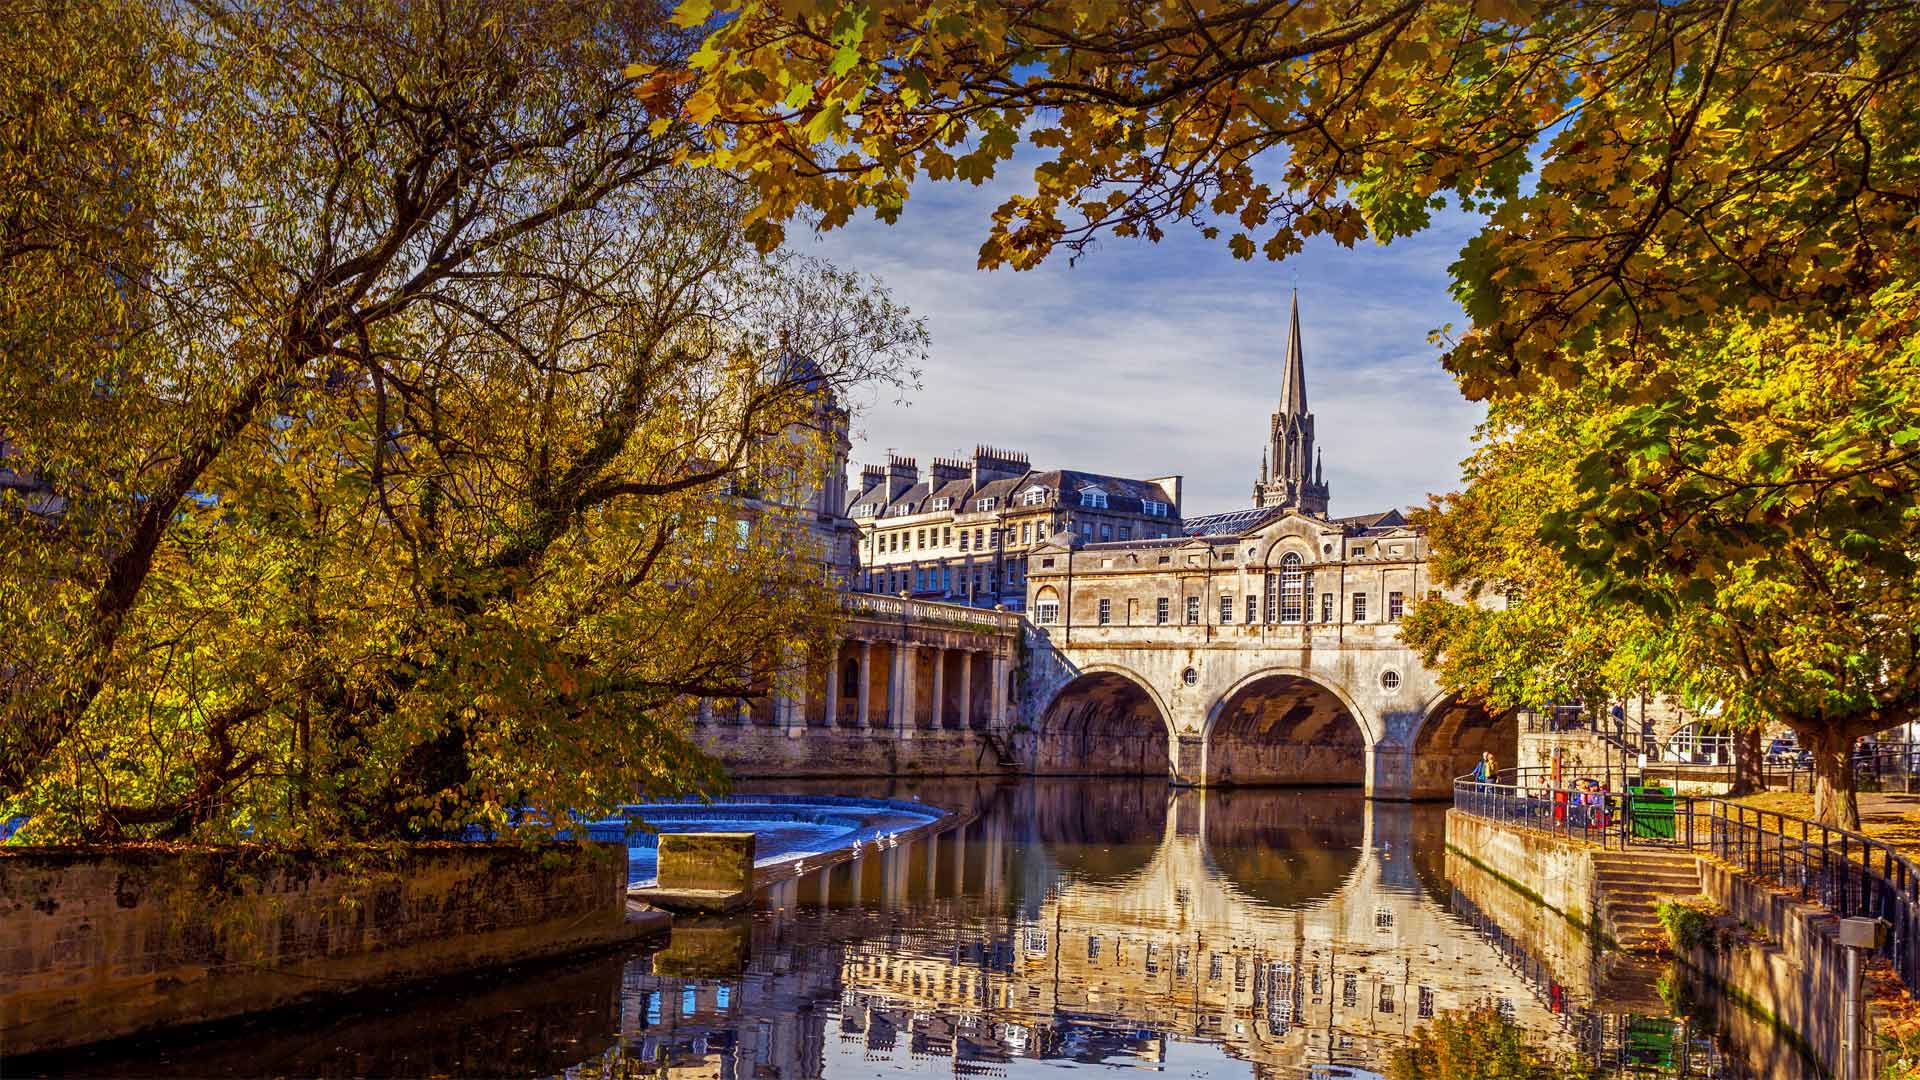 River Avon in Bath, England - Robert Harding World Imagery/Offset by Shutterstock)